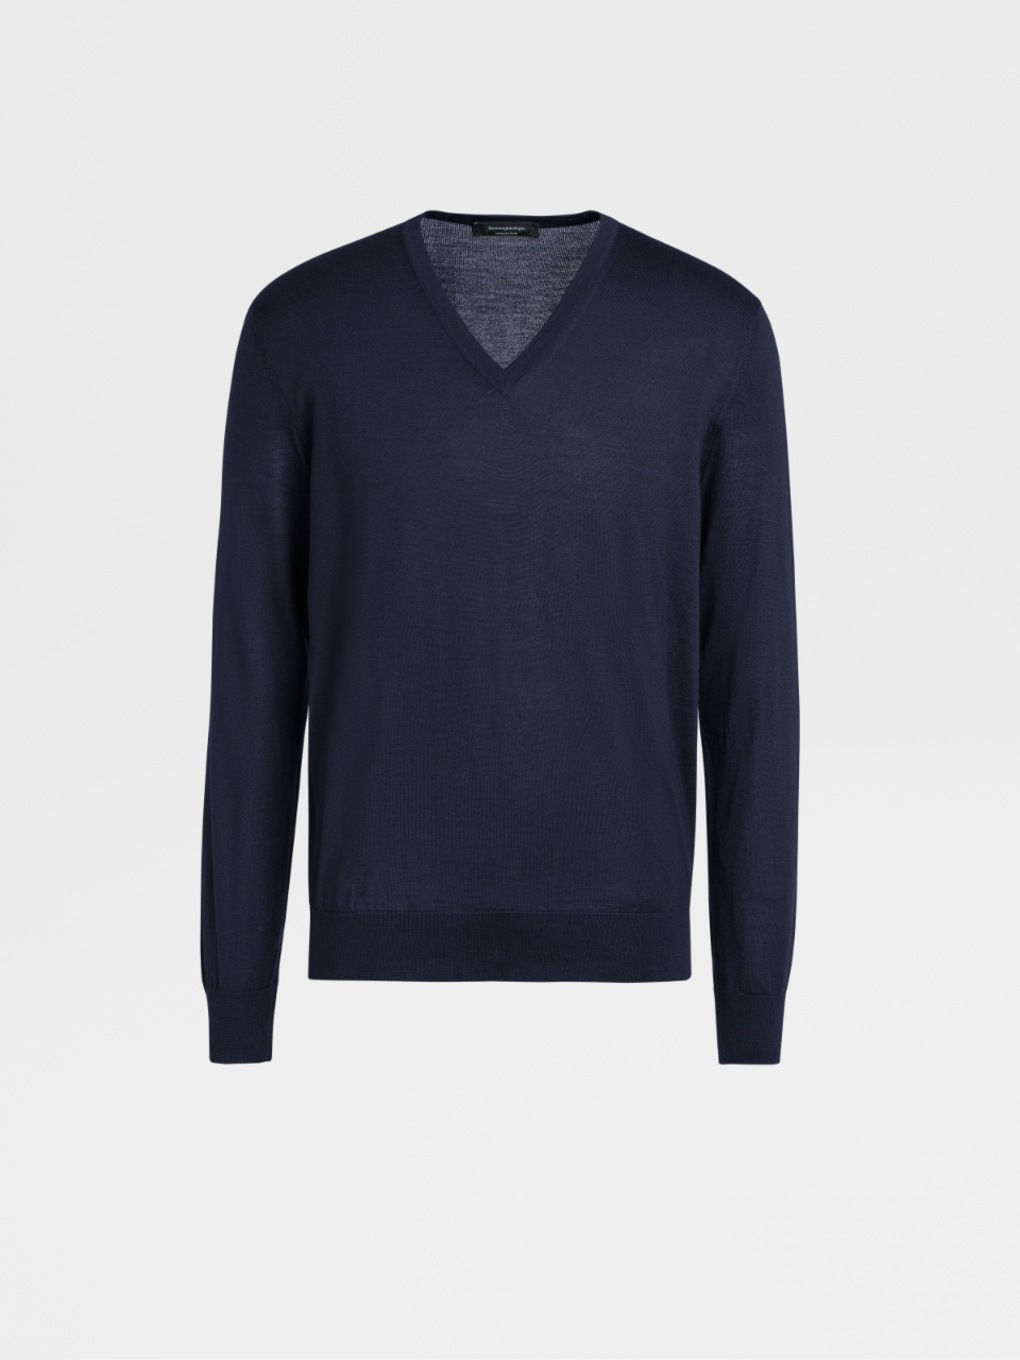 MEN FASHION Jumpers & Sweatshirts Knitted GAP jumper discount 90% Navy Blue L 